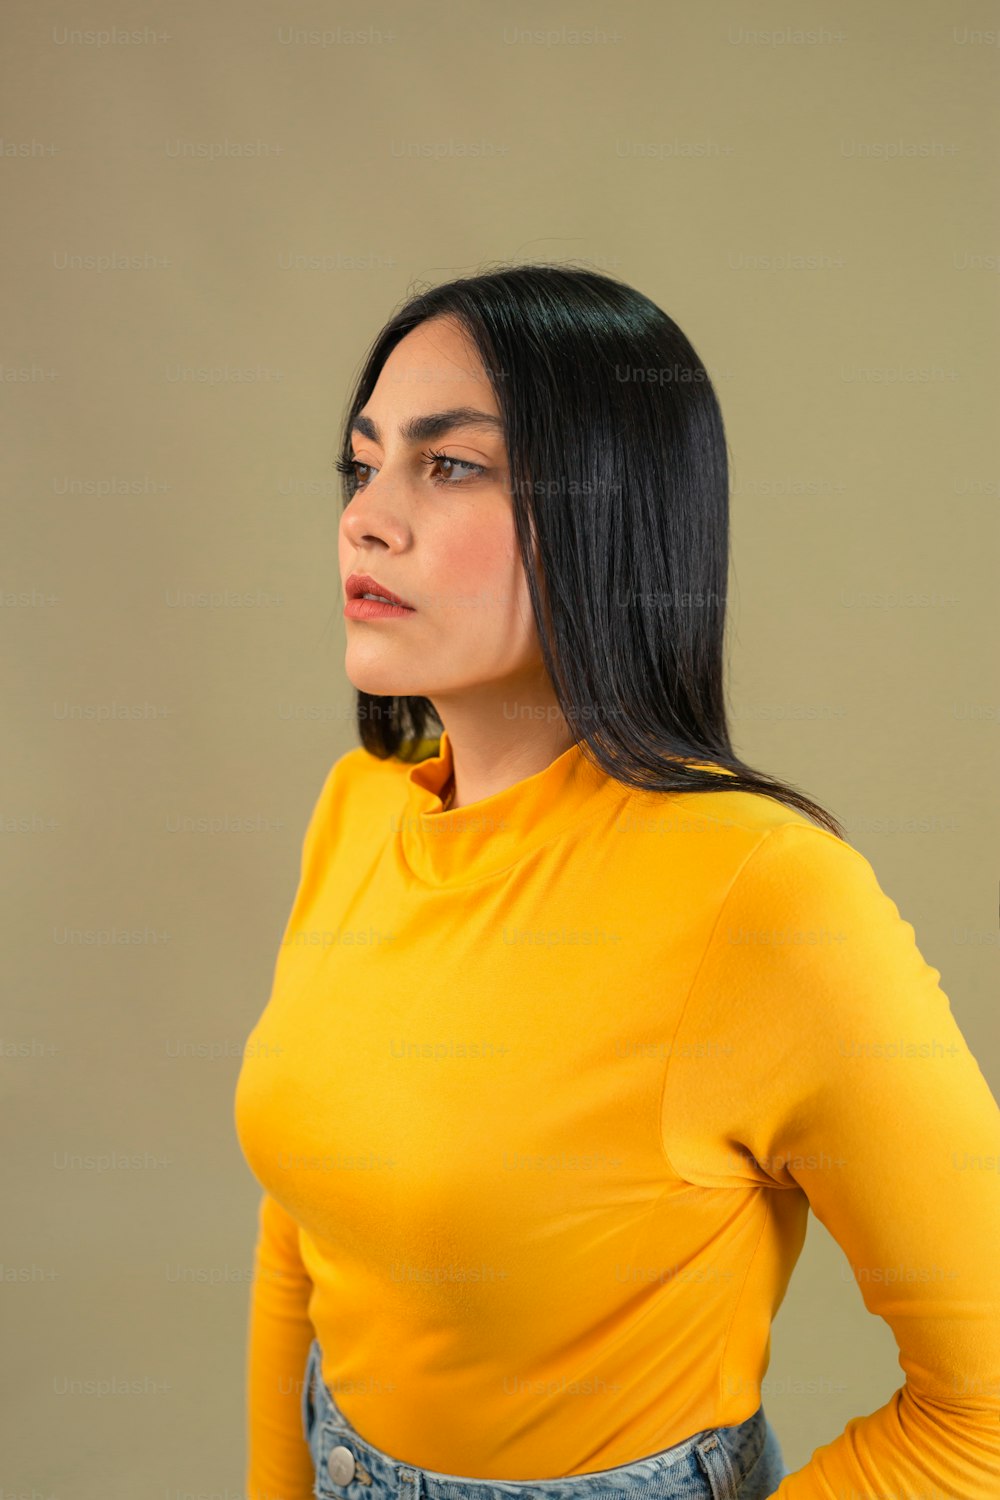 Una donna in una camicia gialla è in posa per una foto